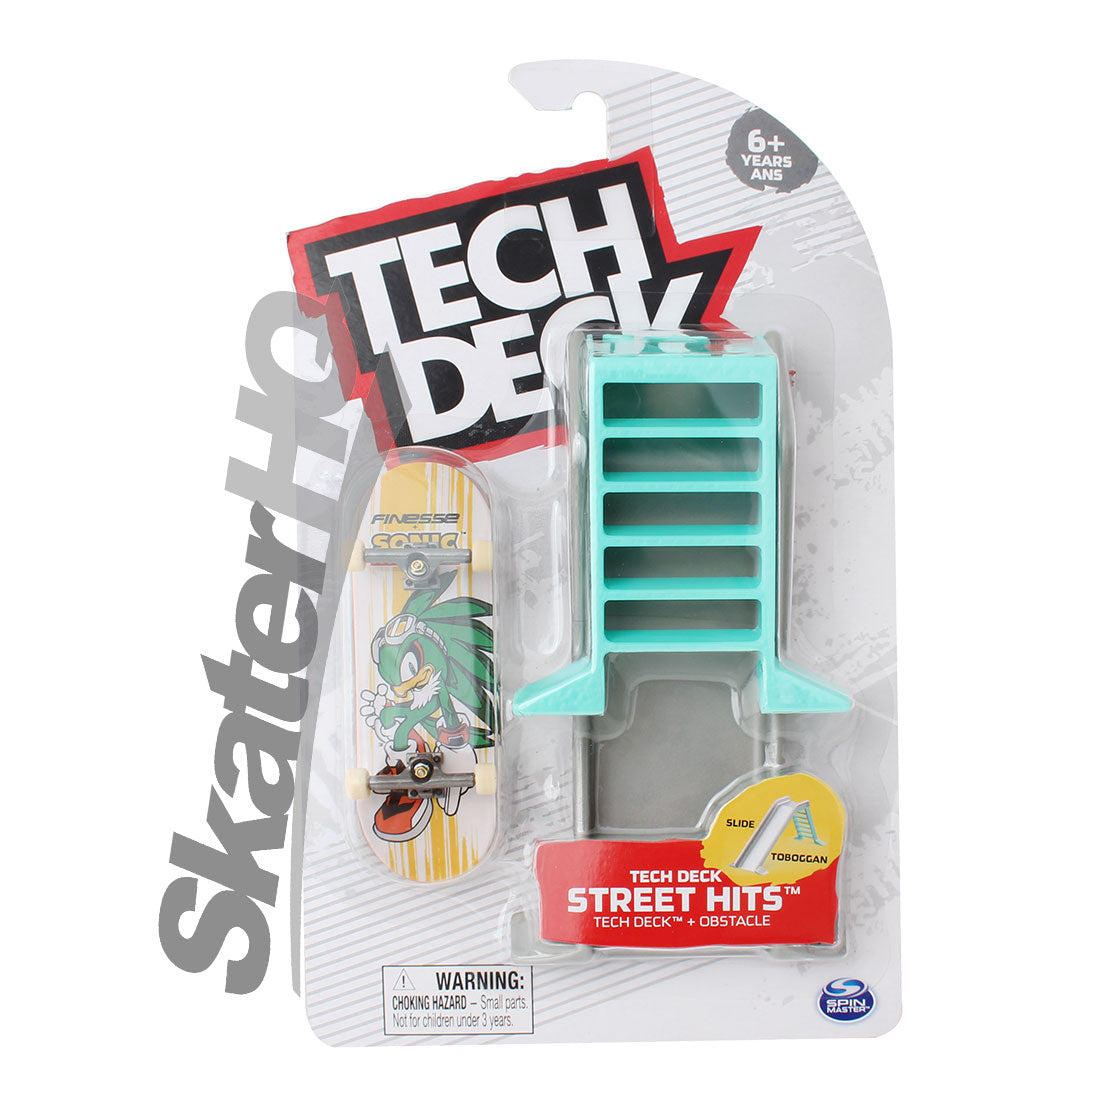 Tech Deck Street Hits - Finesse Slide Skateboard Accessories